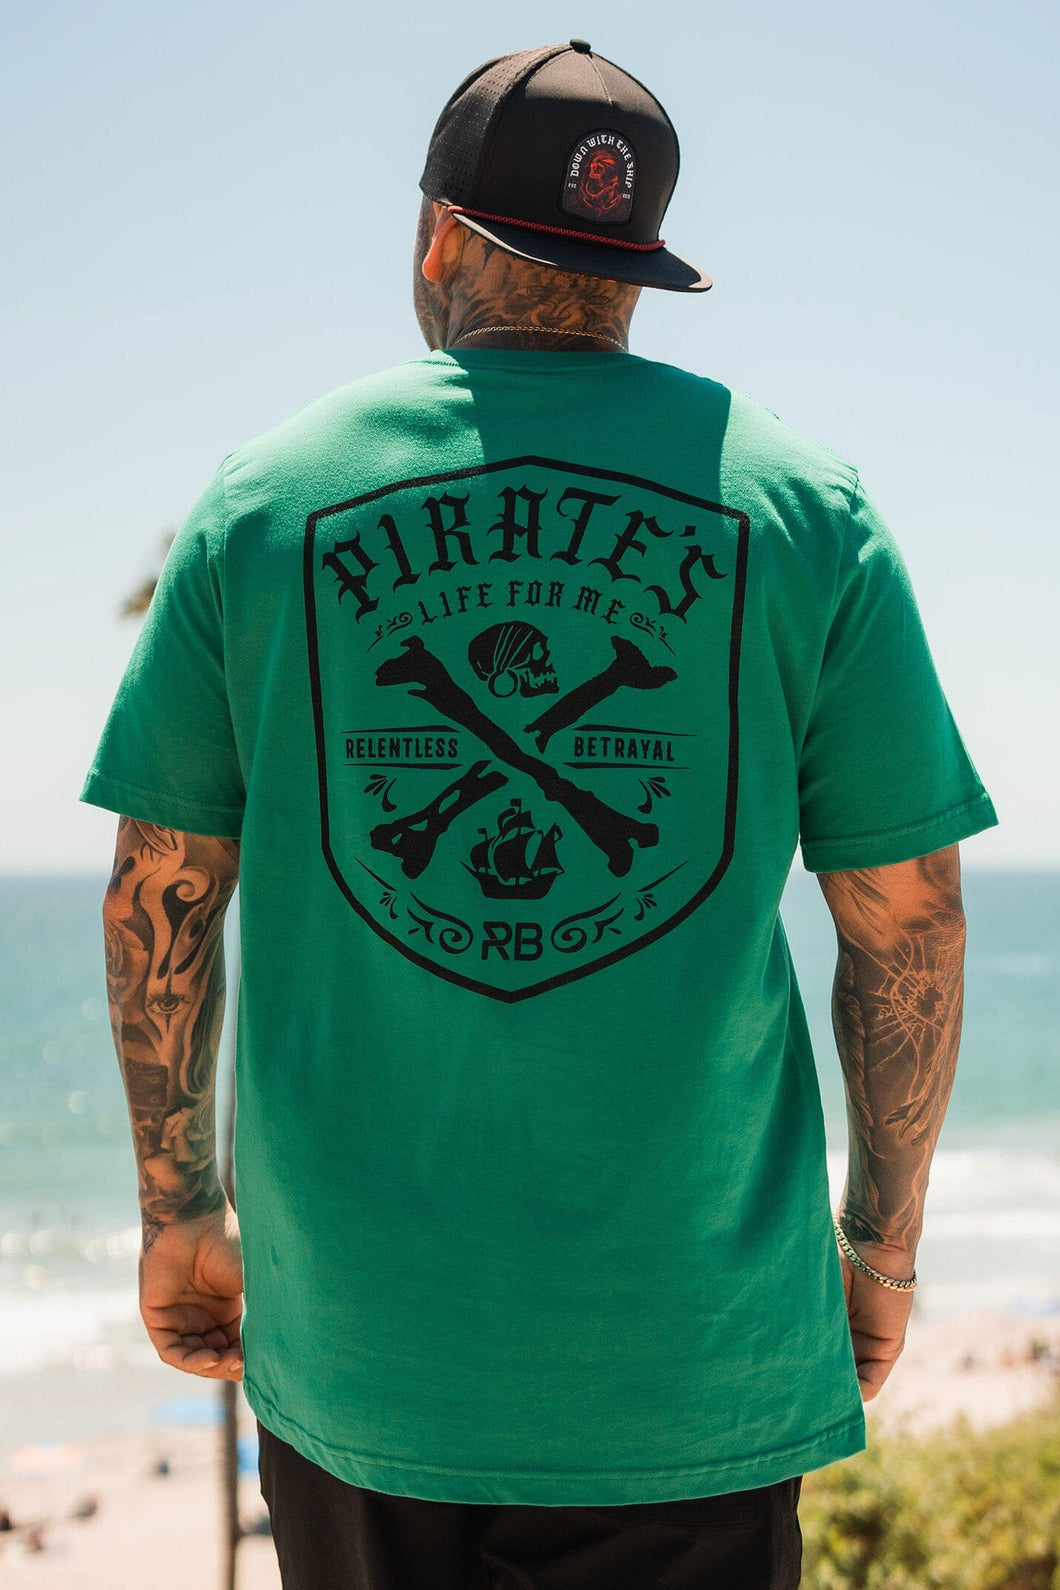 Pirate's Life Sea Green T-Shirt